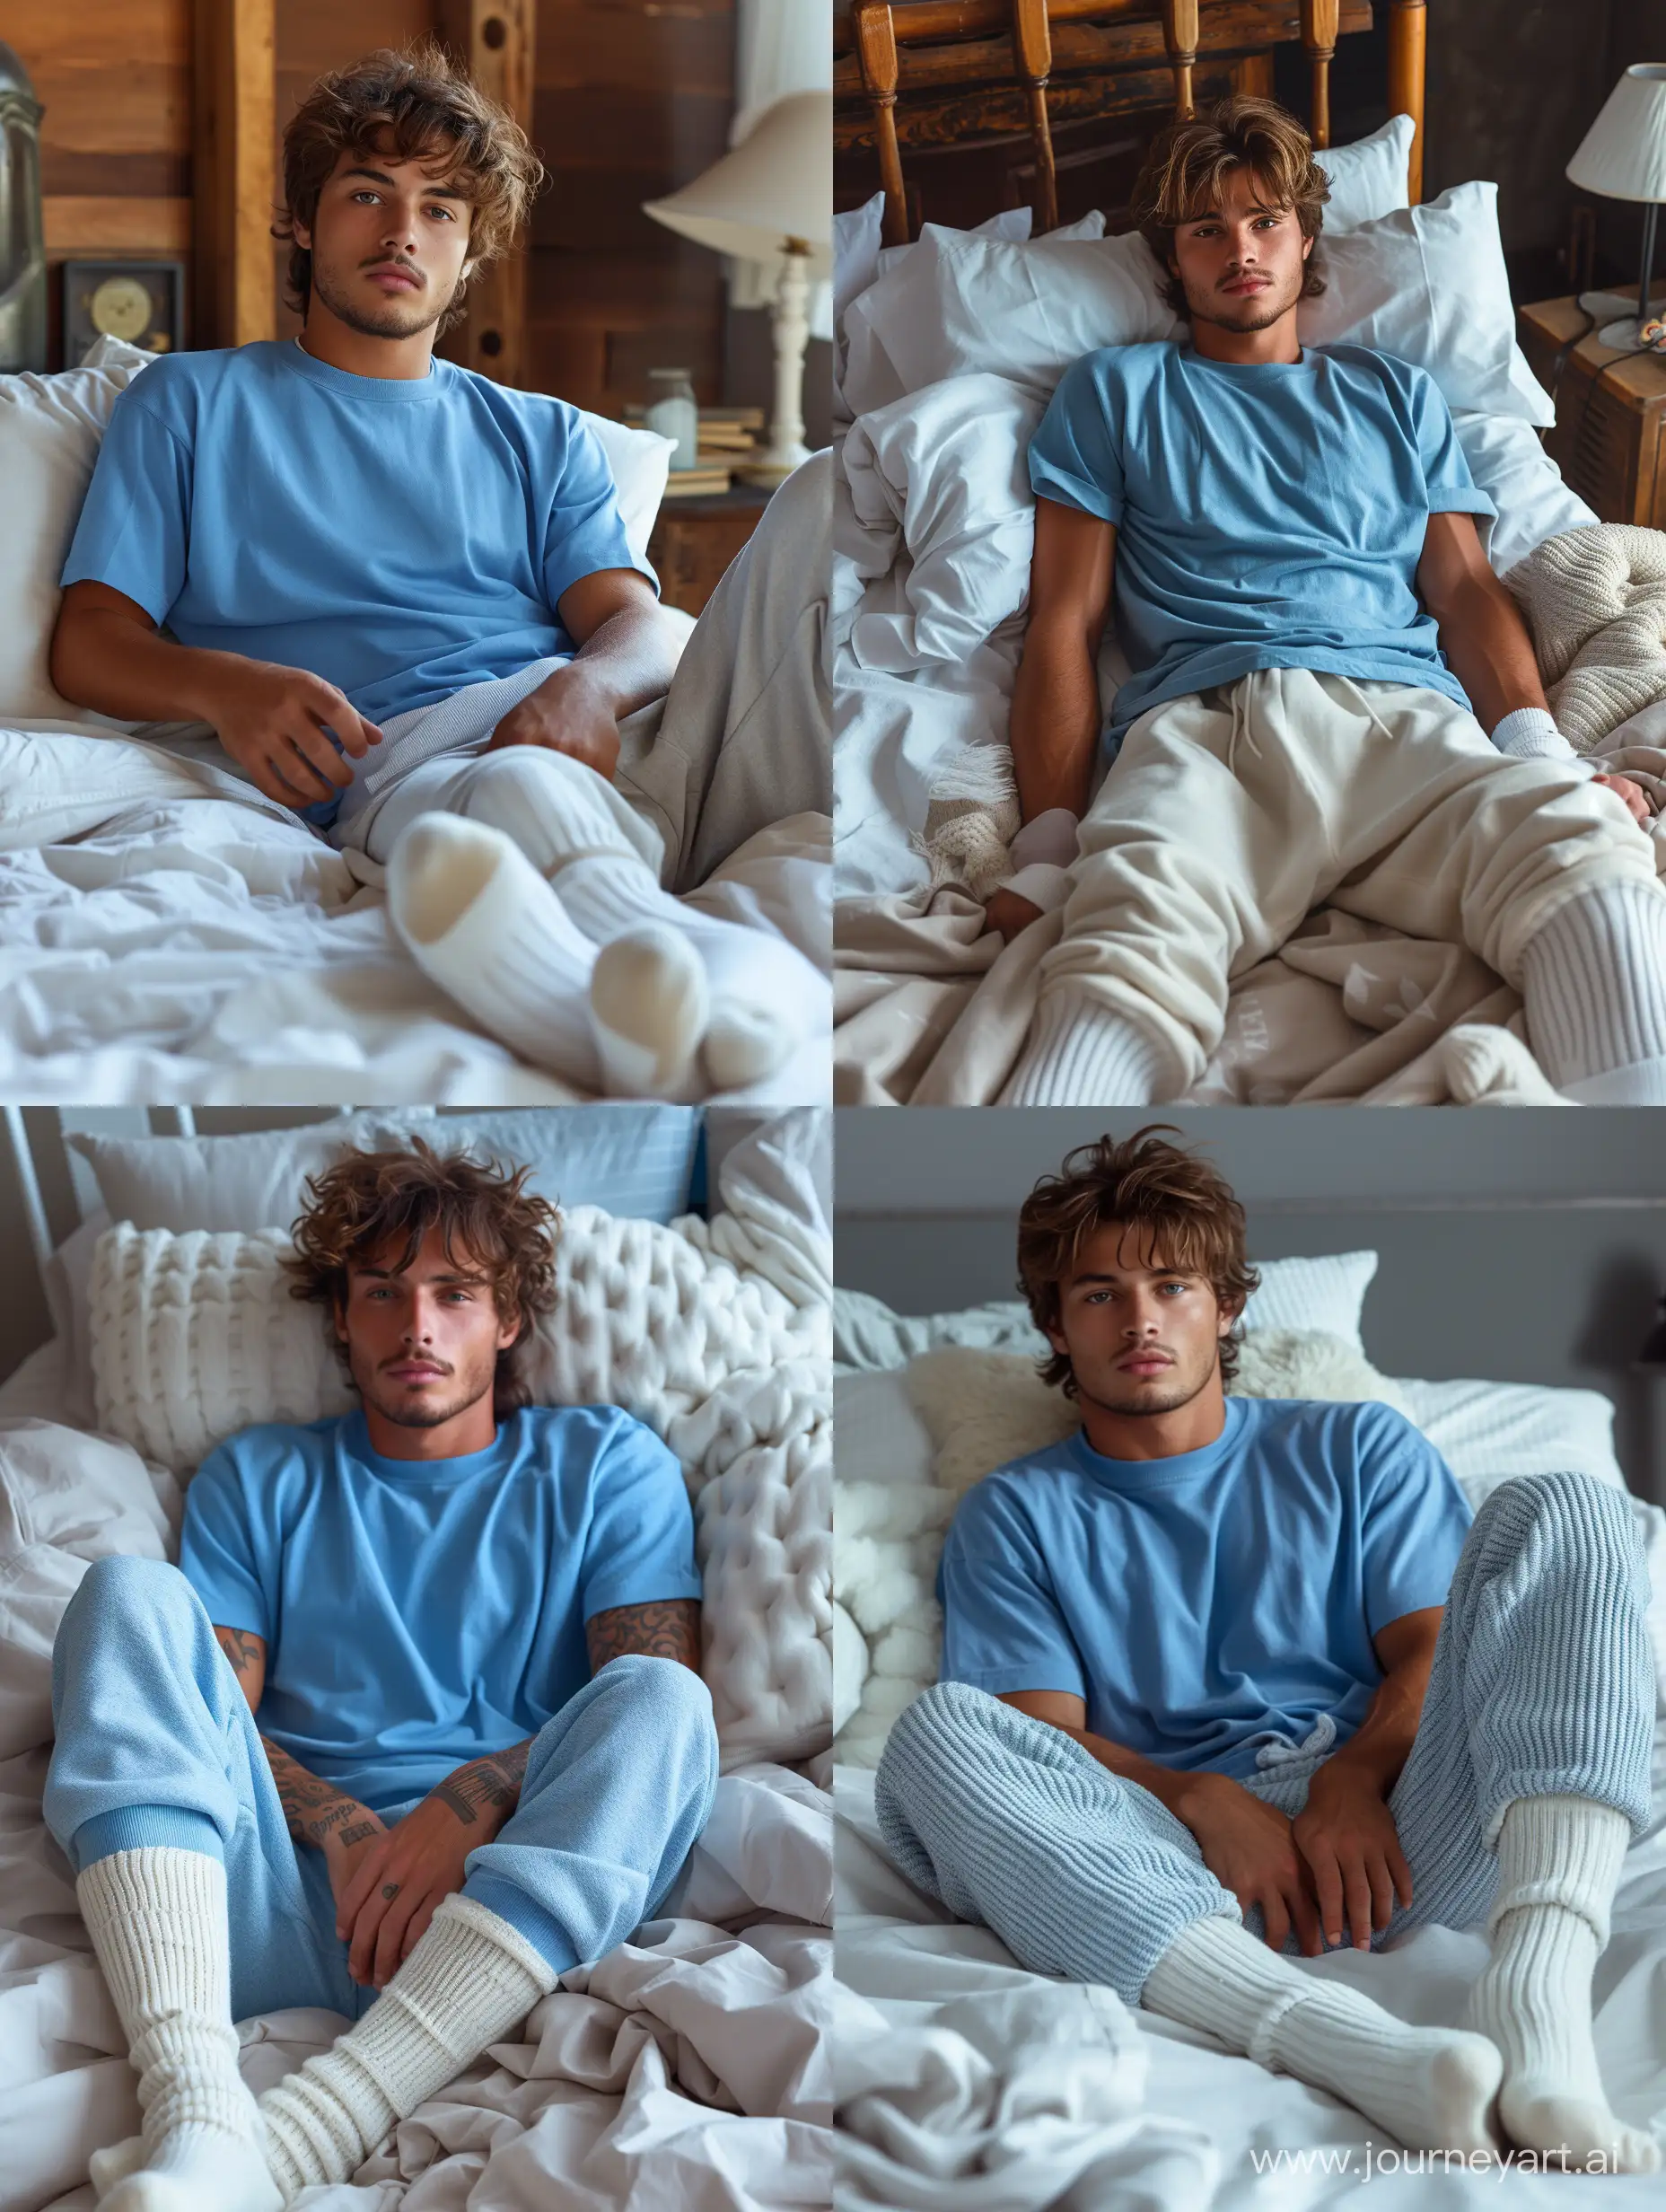 Relaxing-Brazilian-Man-in-Blue-TShirt-Laying-in-Bed